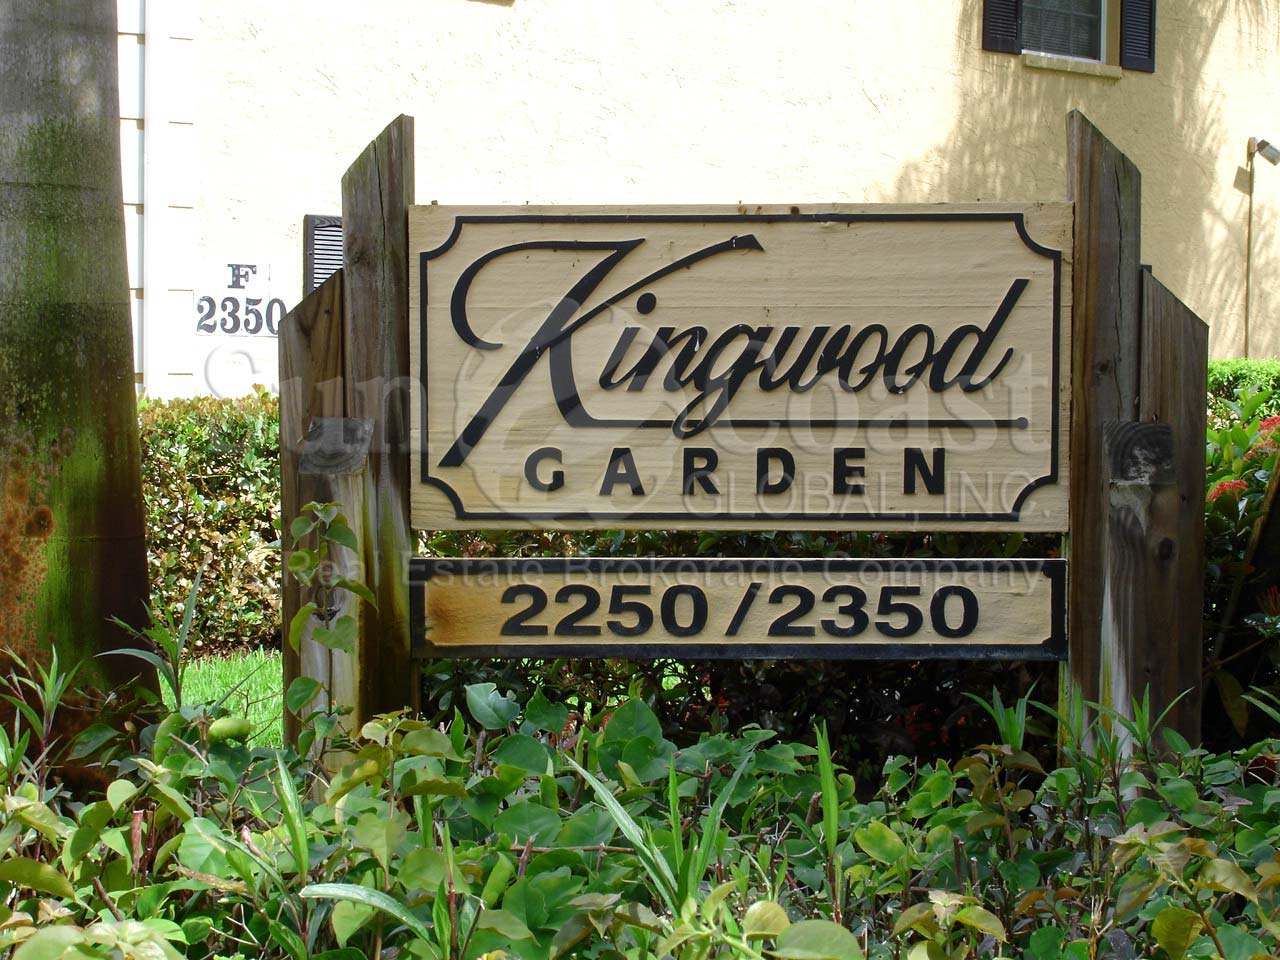 KINGWOOD GARDEN Signage